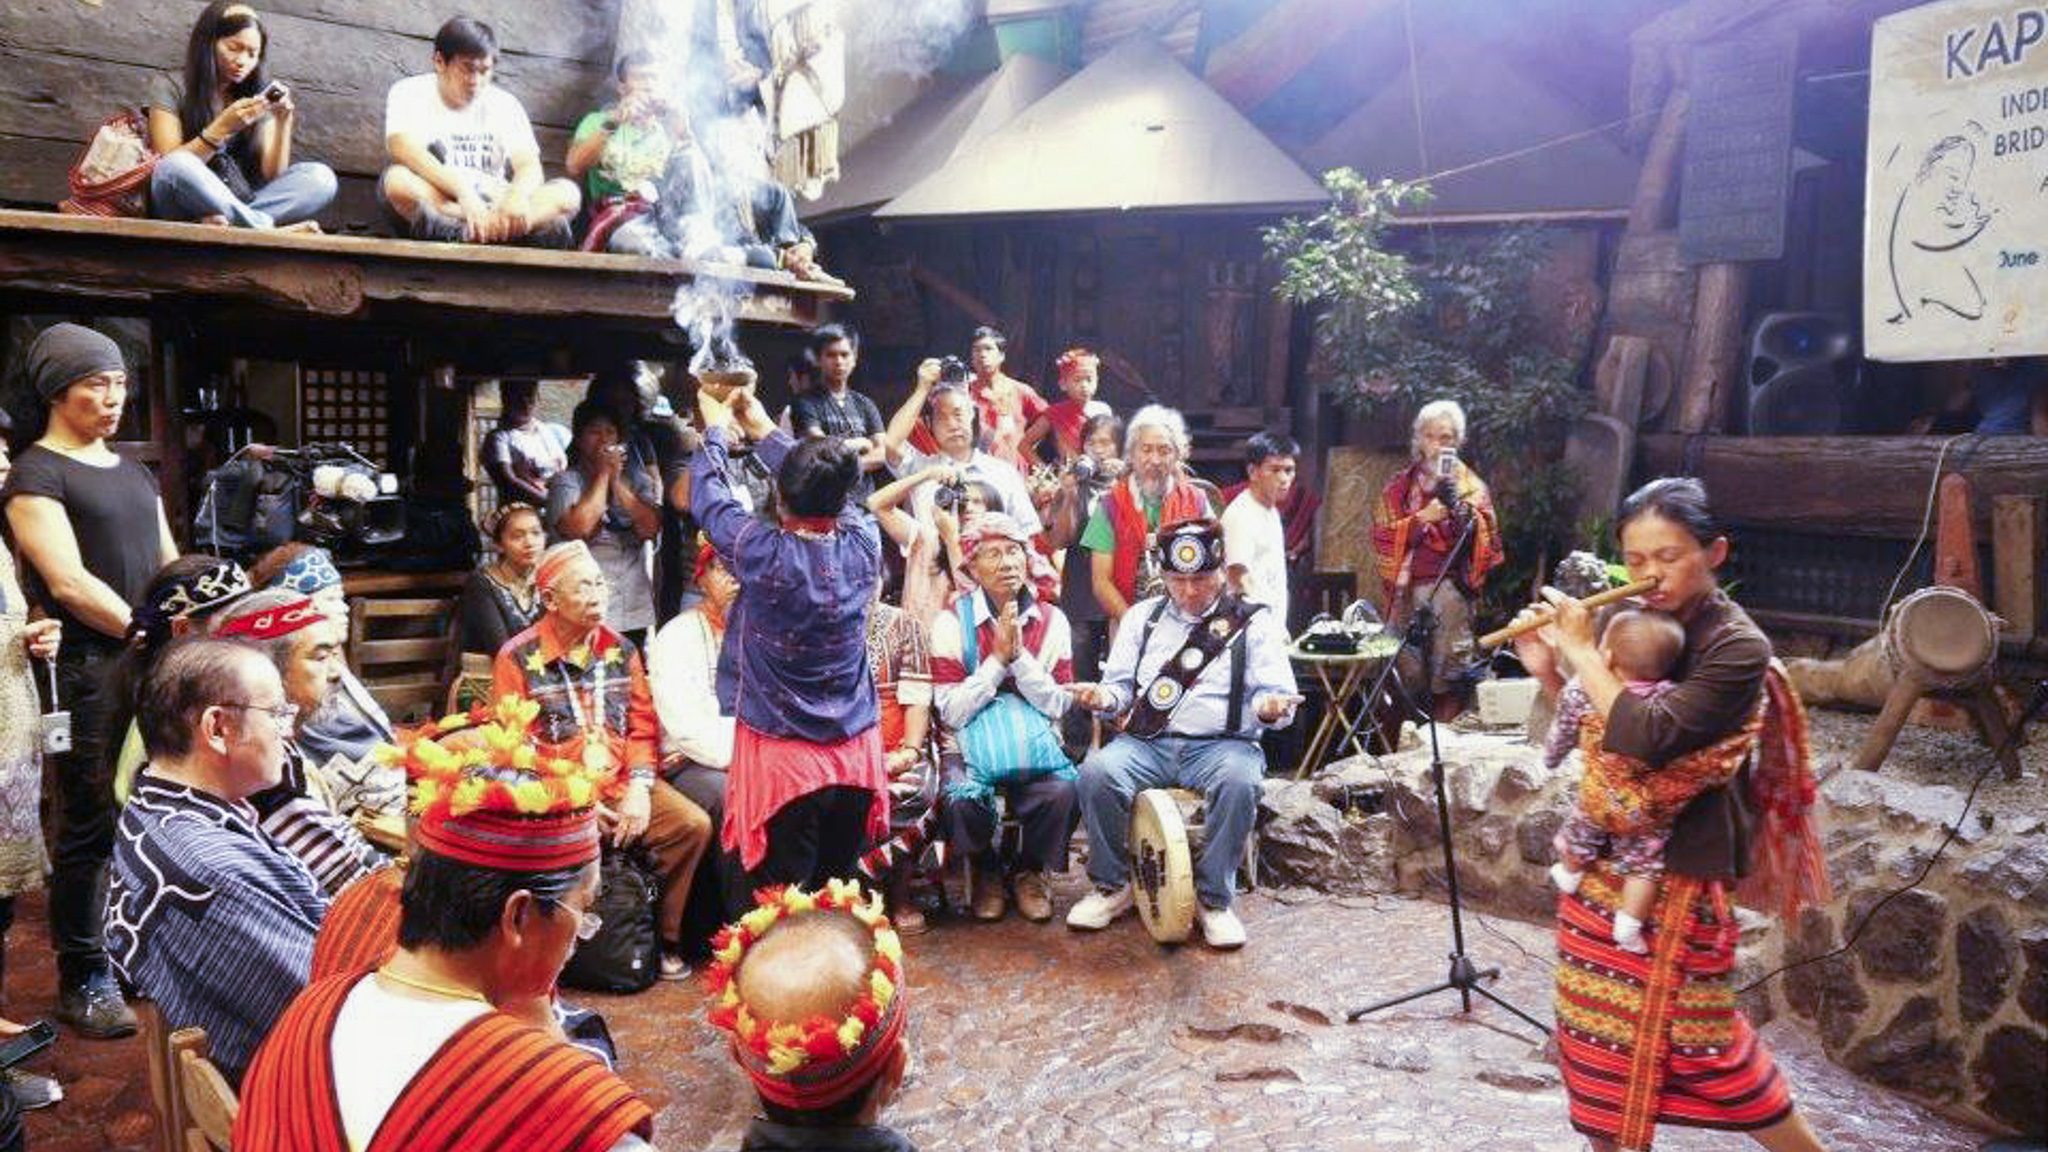 Baguio named to UNESCO Creative Cities Network